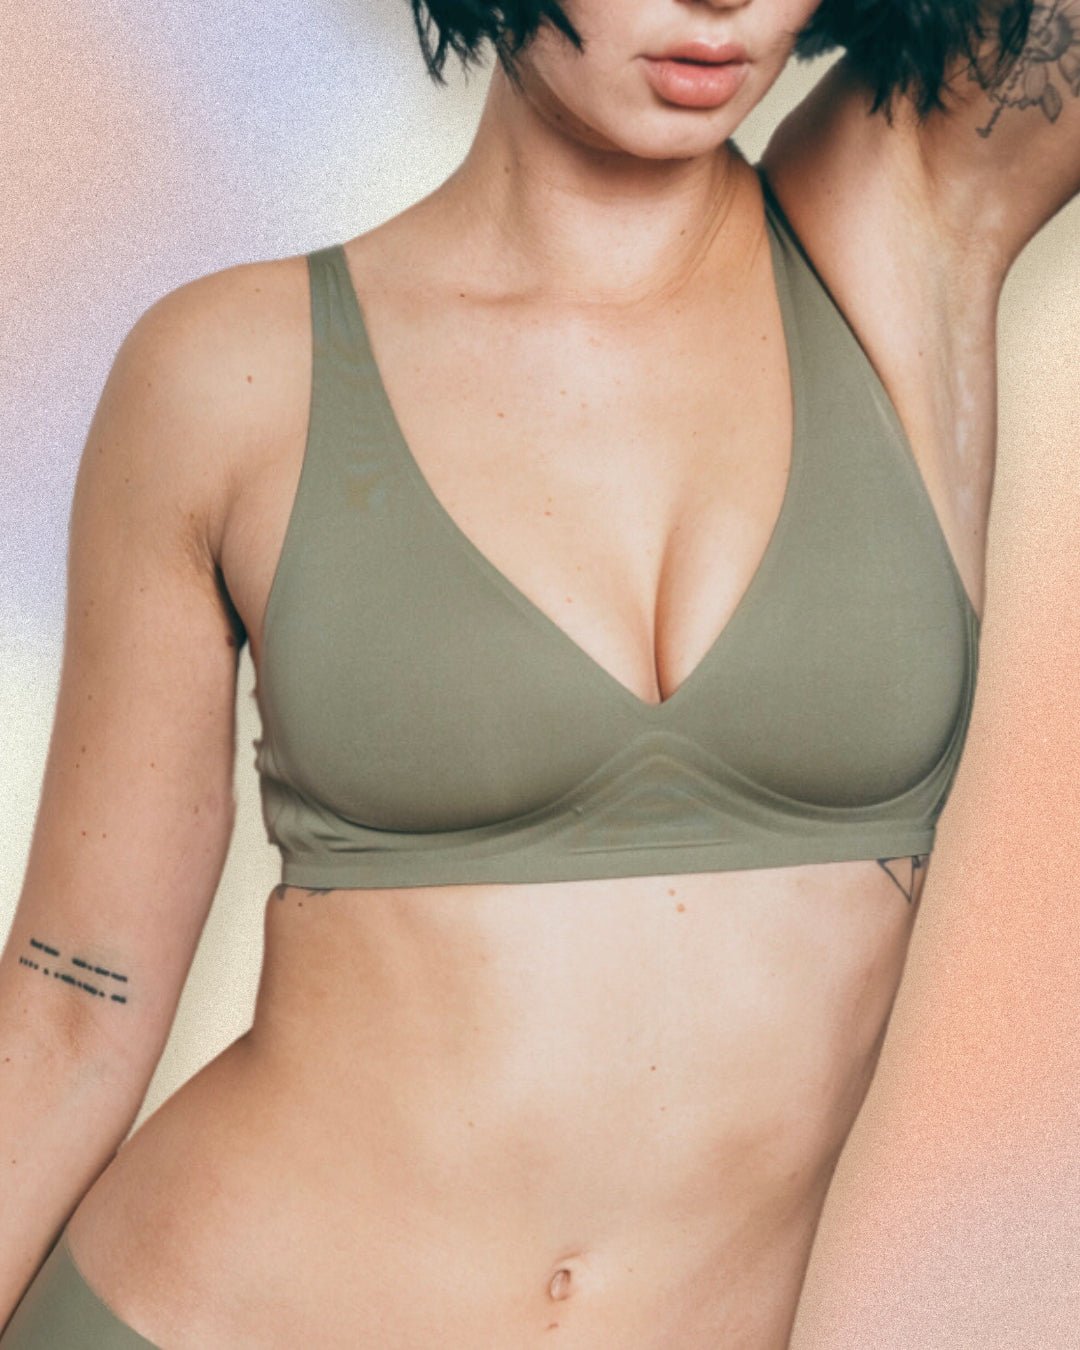 Second Skin Wireless Bra - Natural  Wireless bra, Second skin, Bra styles